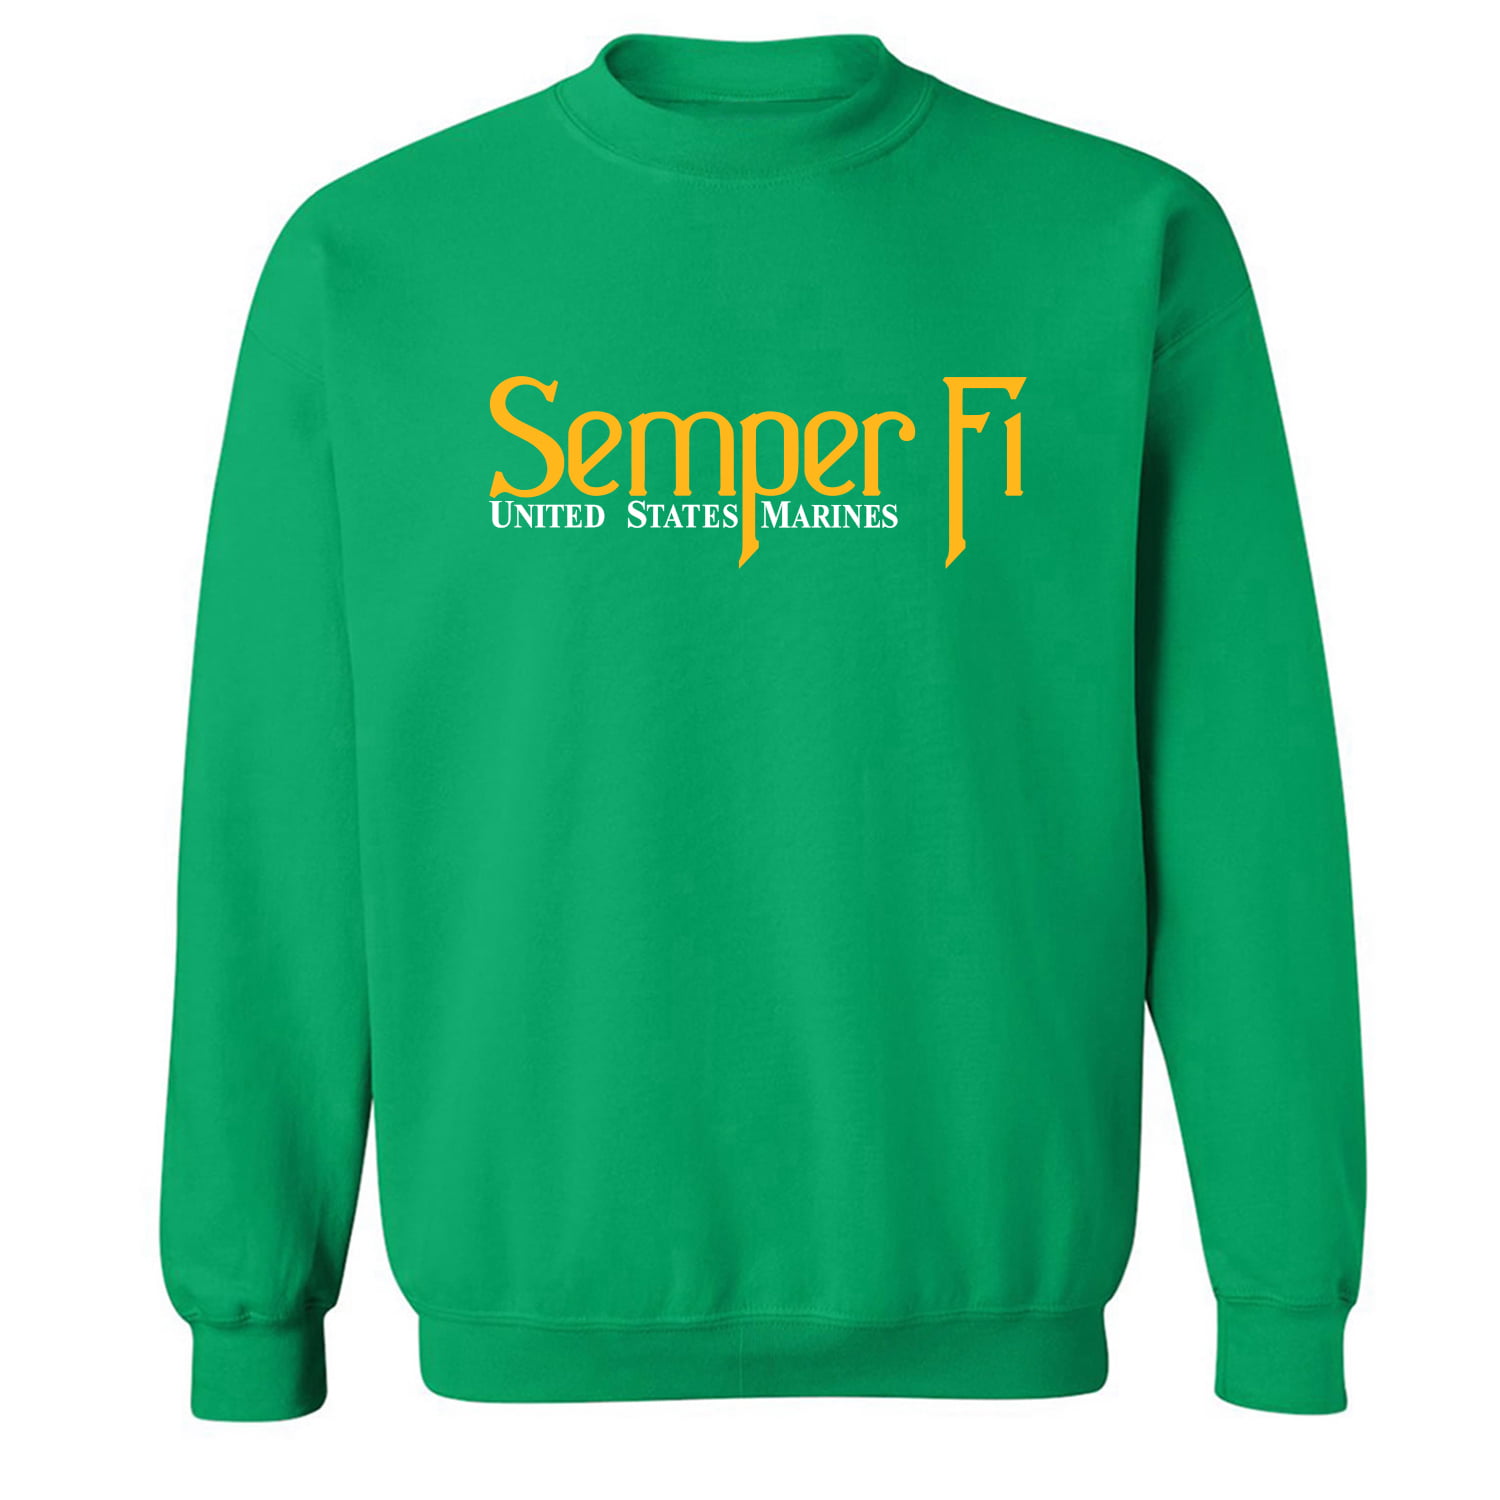 Semper Fi United States Marines Crewneck Sweatshirt